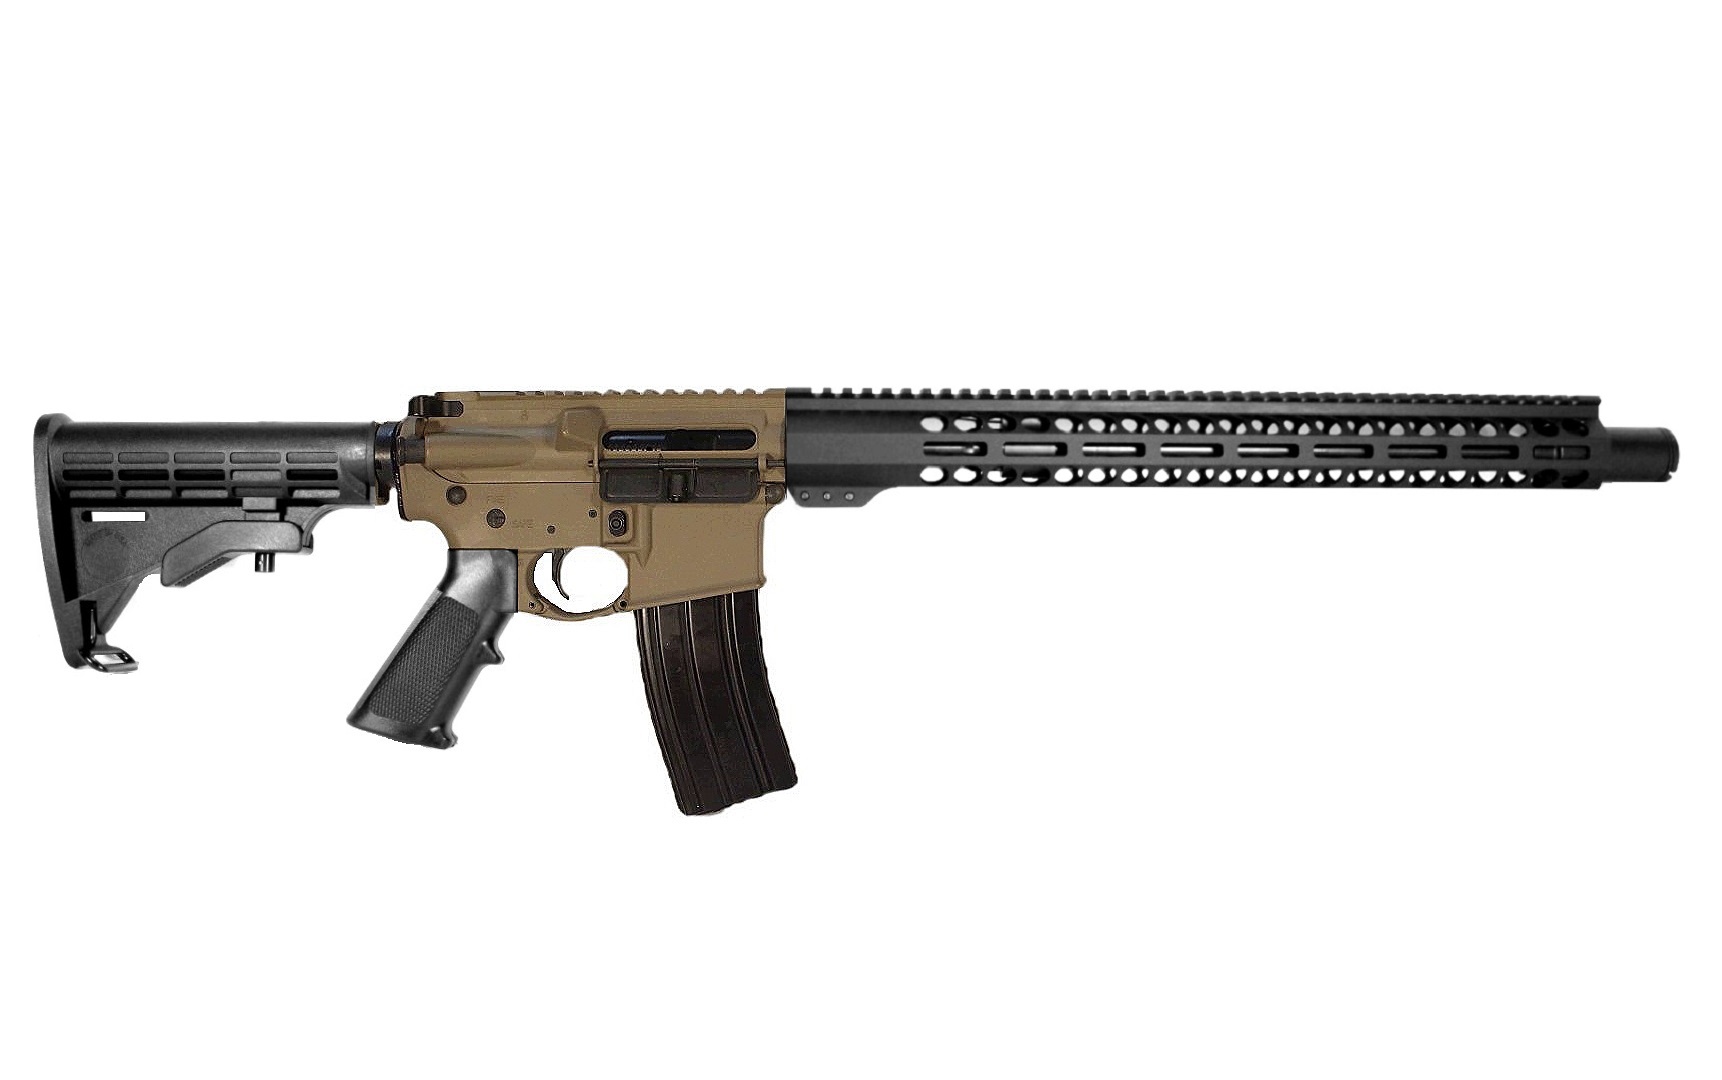 16 inch 300BLK AR Rifle Two Tone FDE/BLK